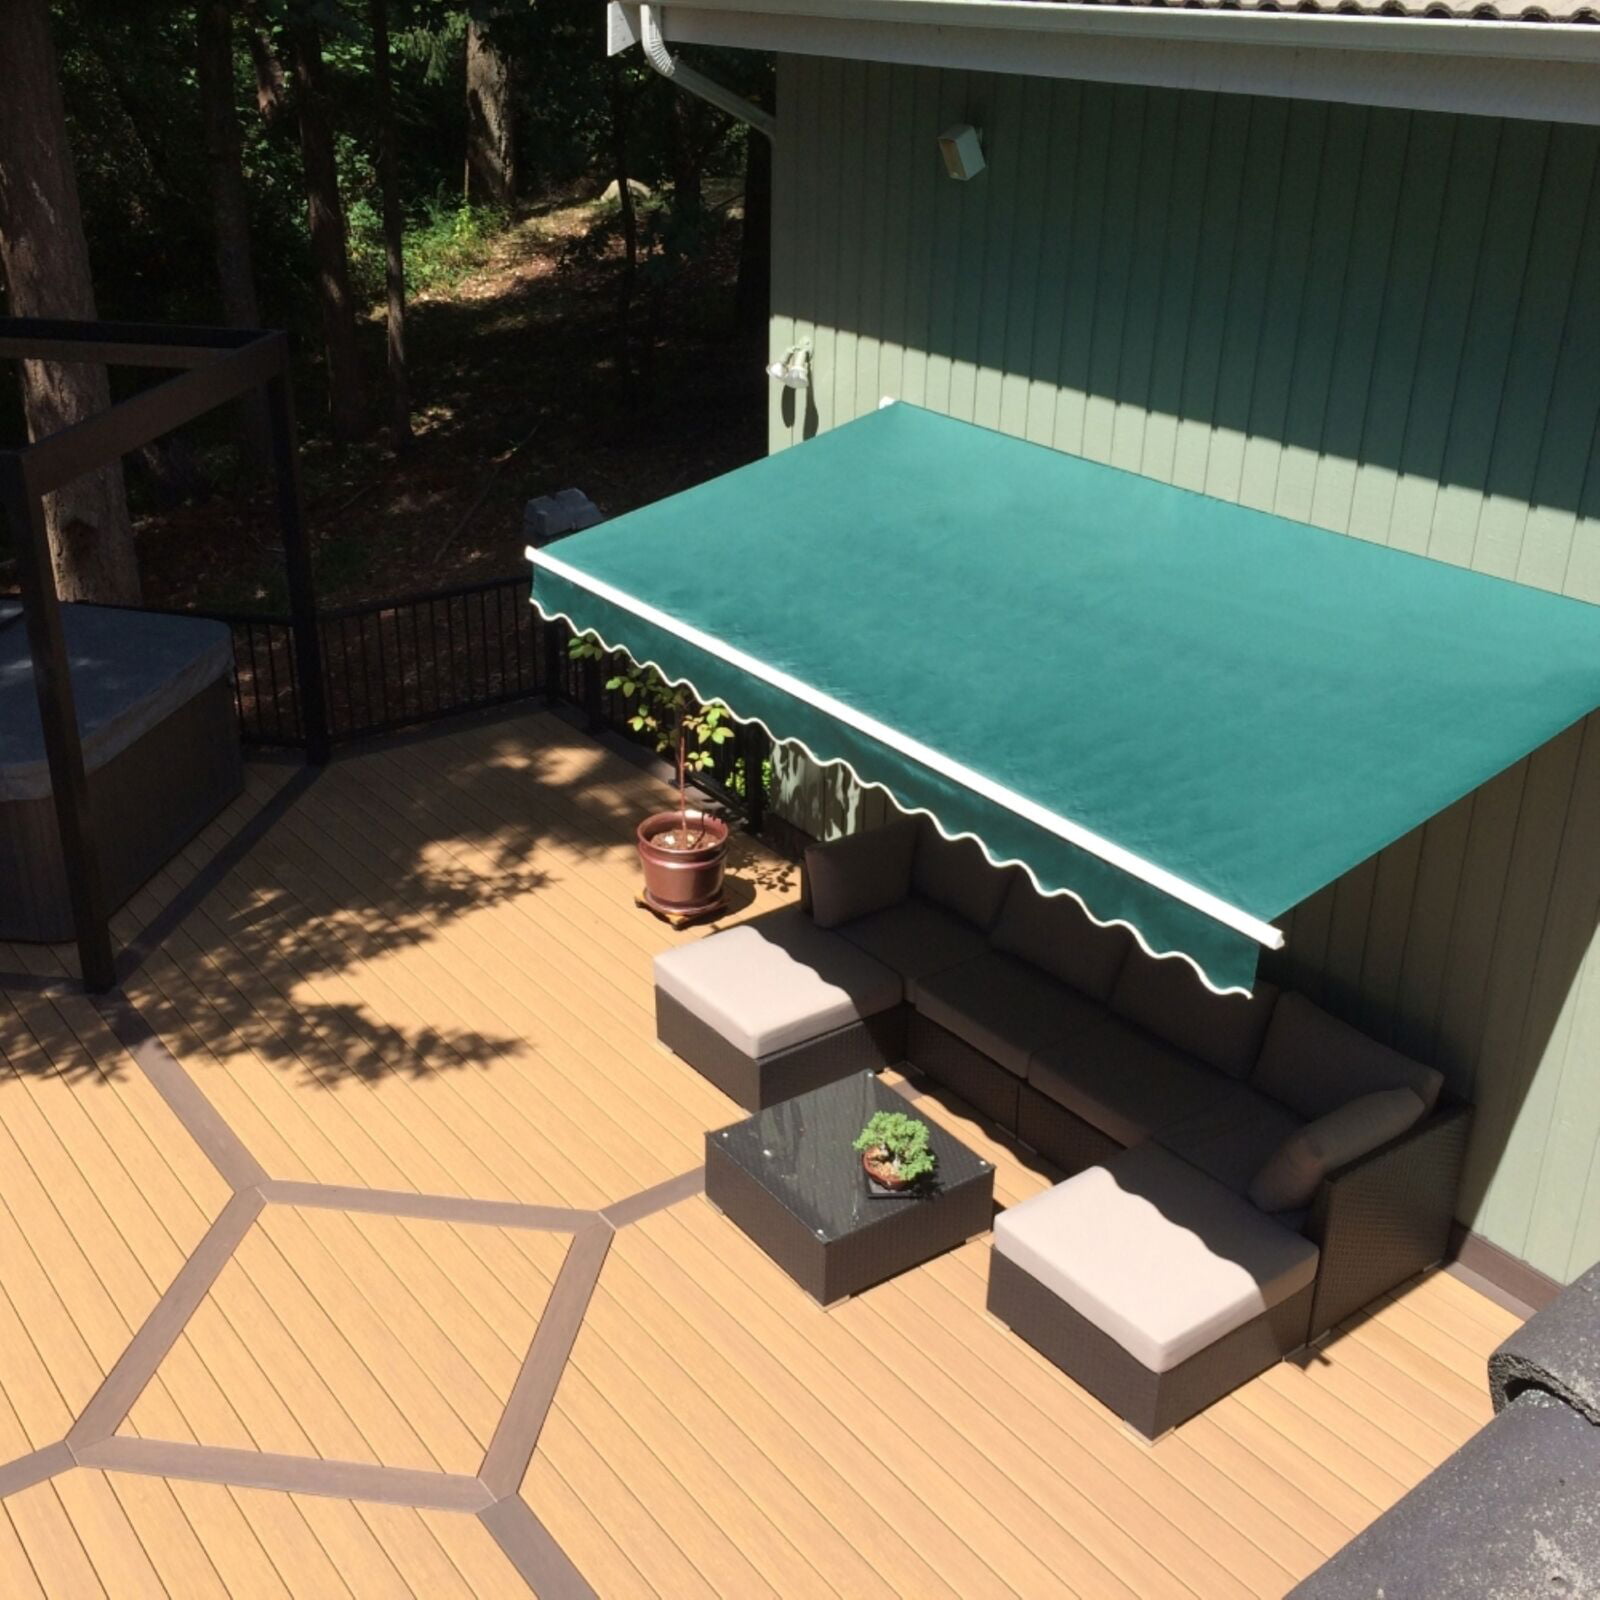 ALEKO Retractable Patio Awning 6.5 X 5 Ft Deck Sunshade Green Color 